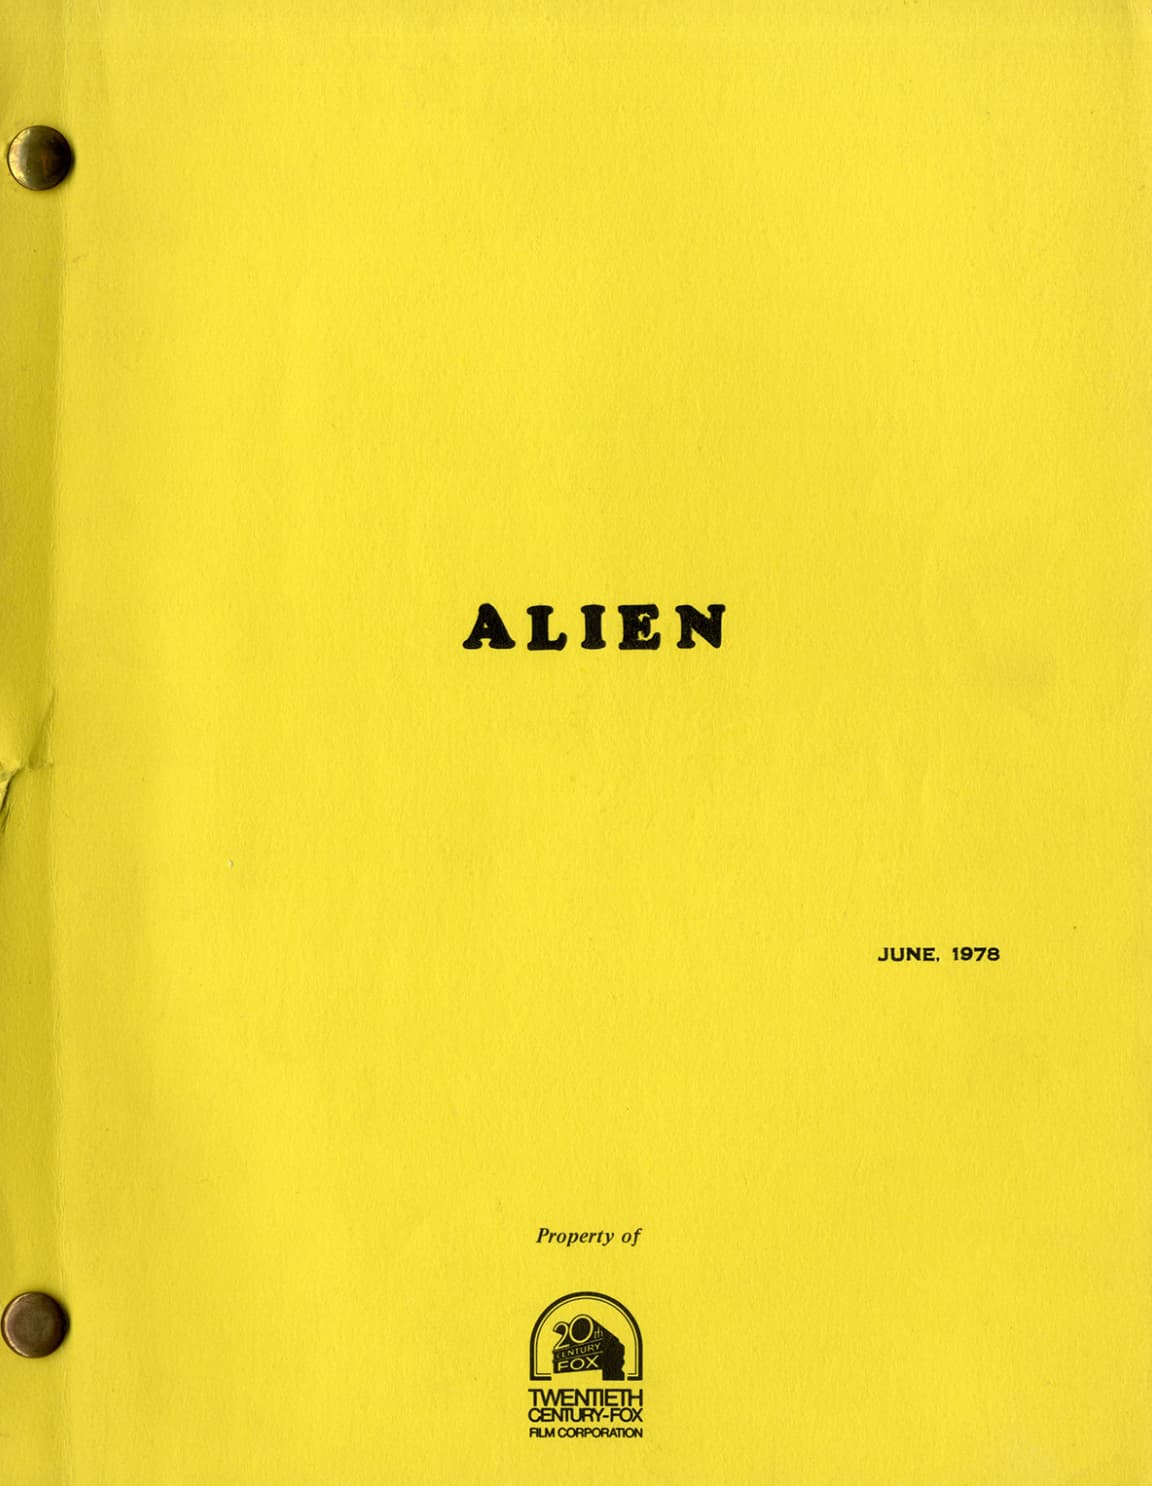 paper product - Alien Property of Century Fox Twentieth CenturyFox Film Corporation